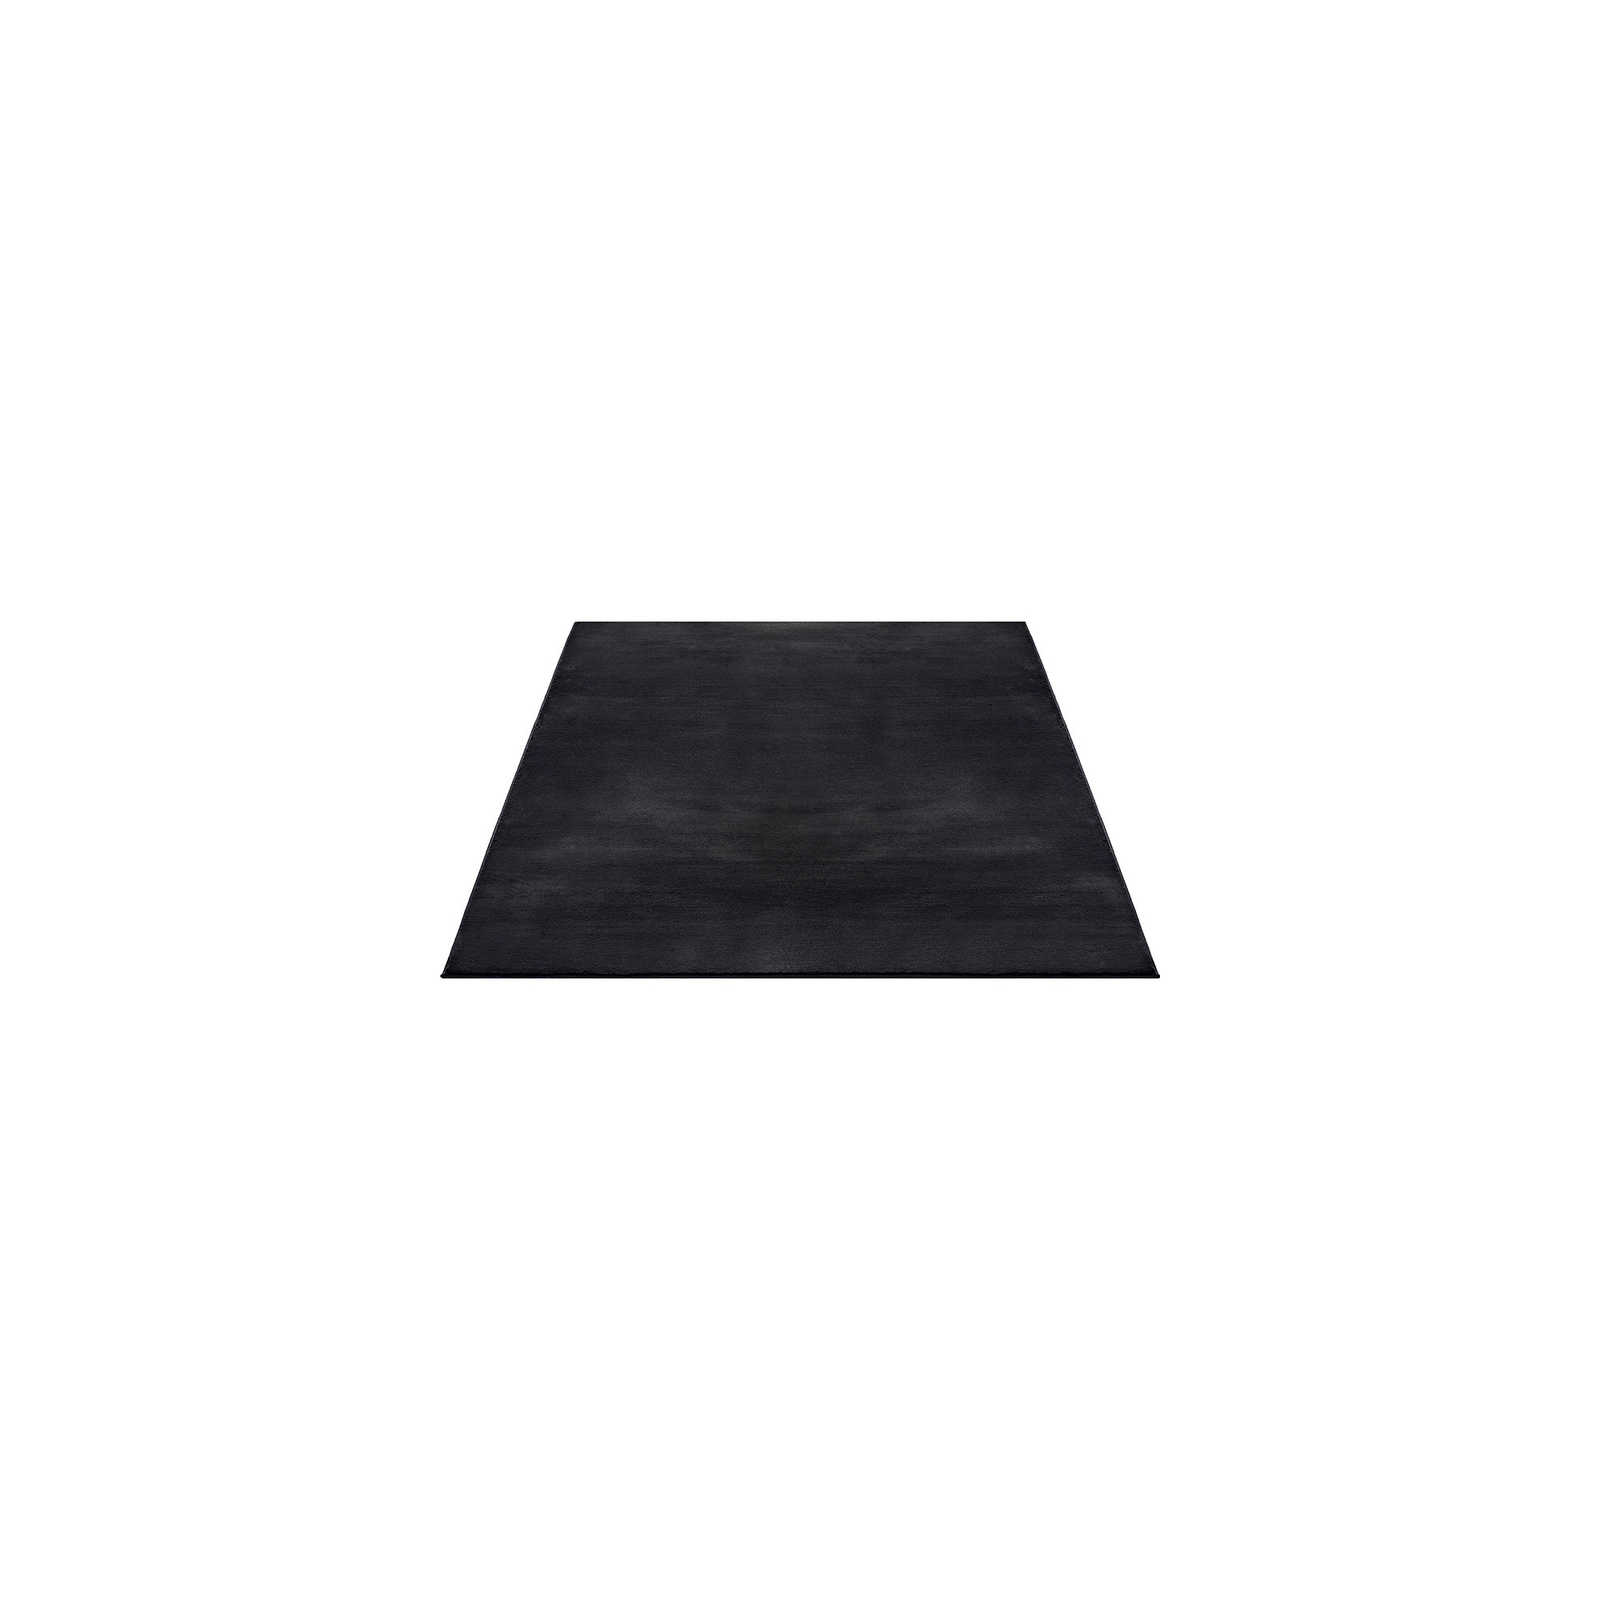 Cuddly soft high pile carpet in black - 160 x 117 cm
